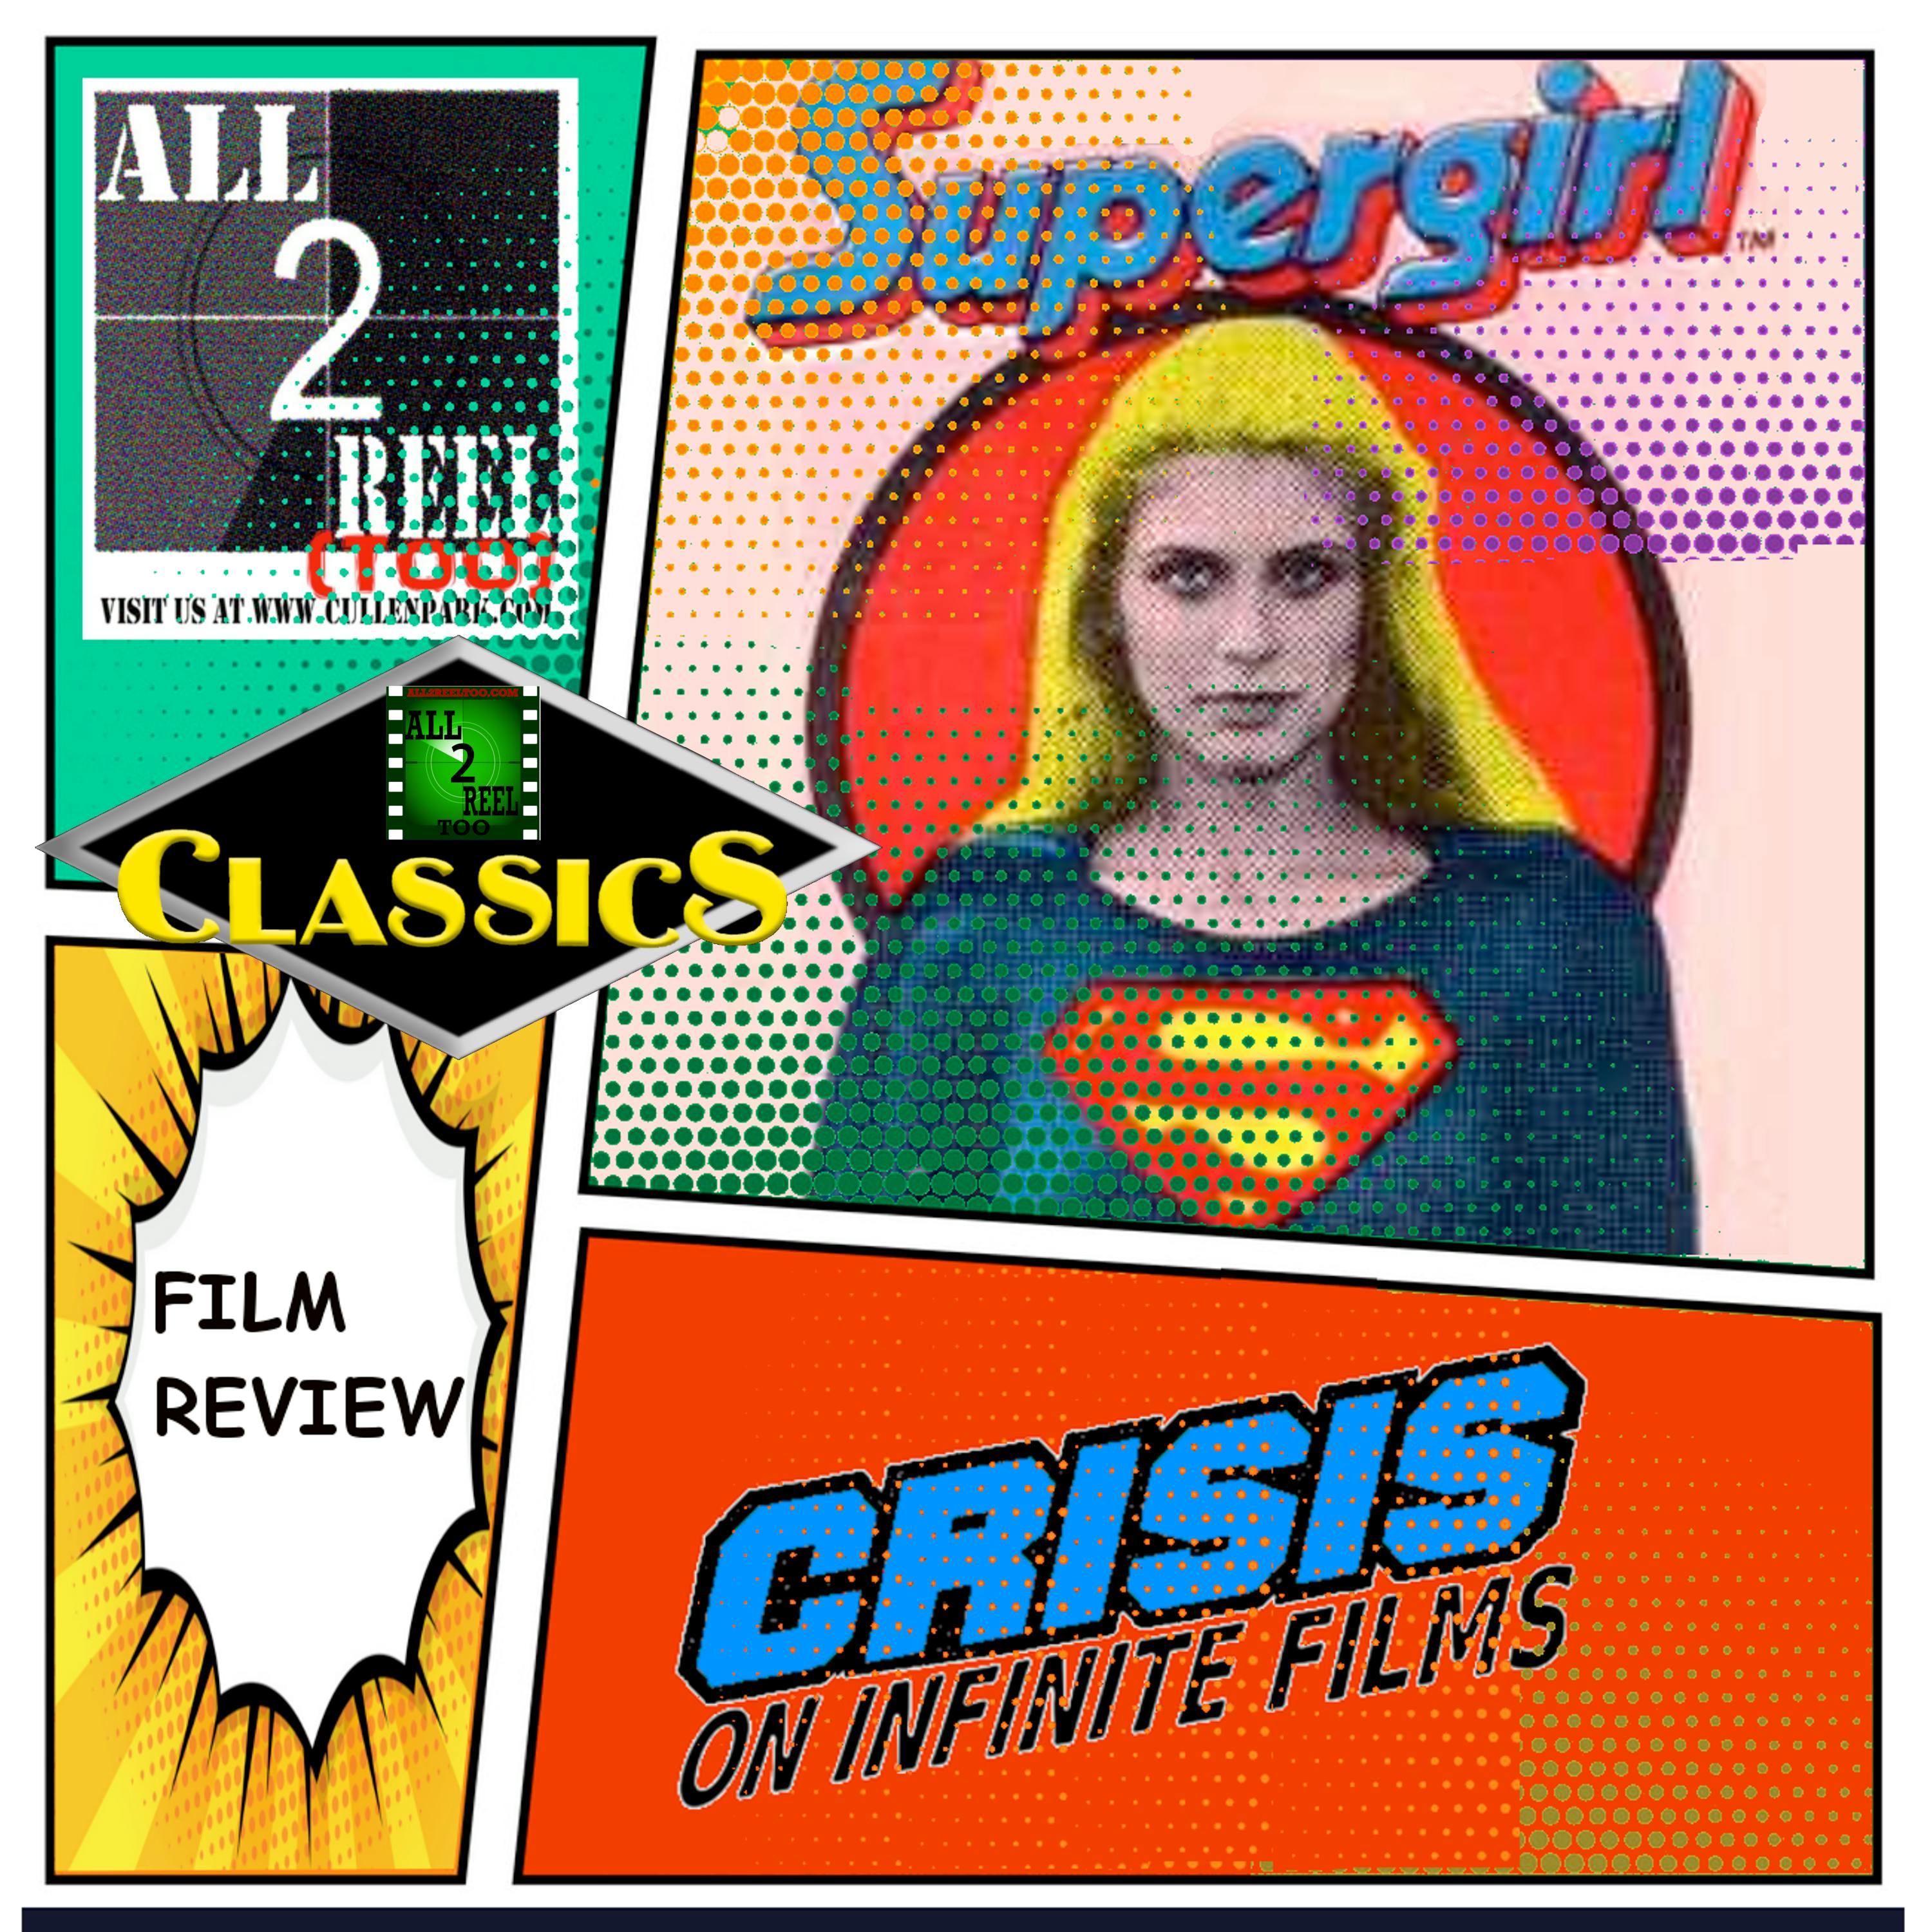 ALL2REELTOO CLASSICS - Supergirl (1984)-Crisis On Infinite Films Image